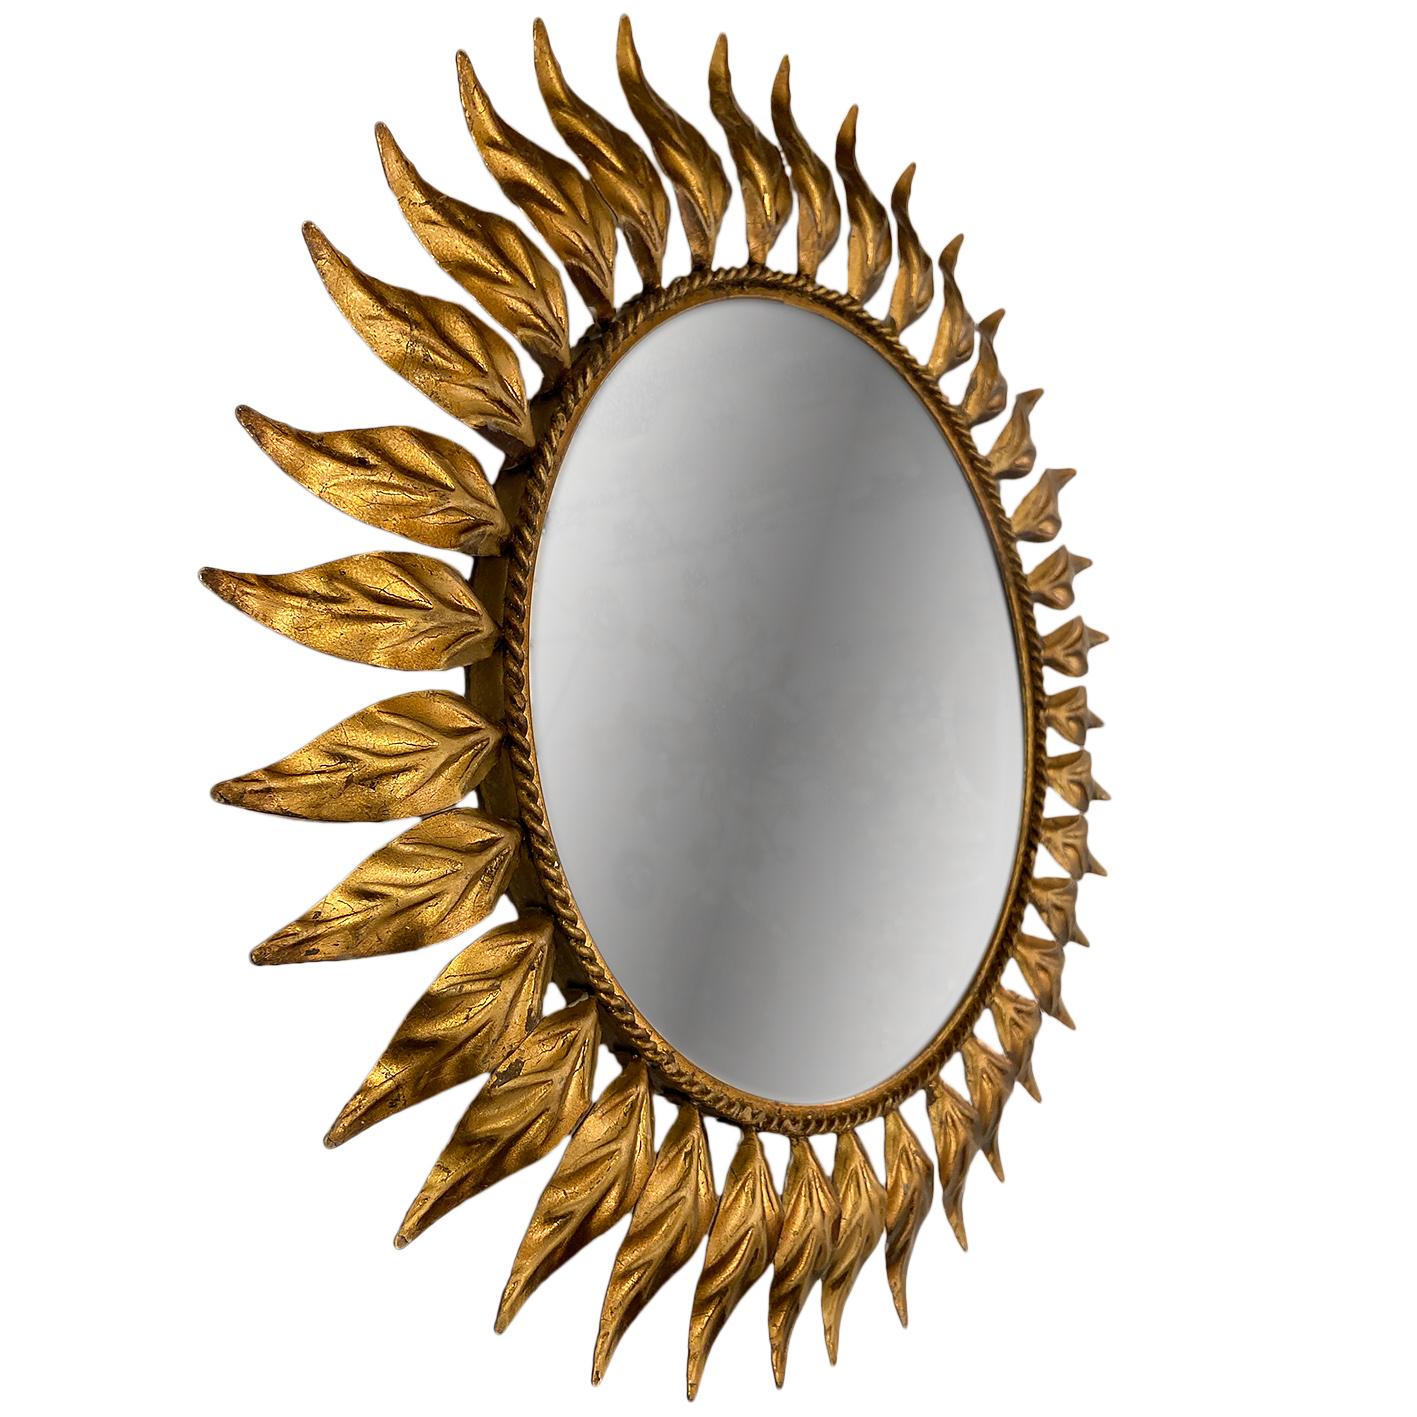 A circa 1950s Italian gilt metal sunburst mirror with original patina.

Measurements:
Diameter 18.25